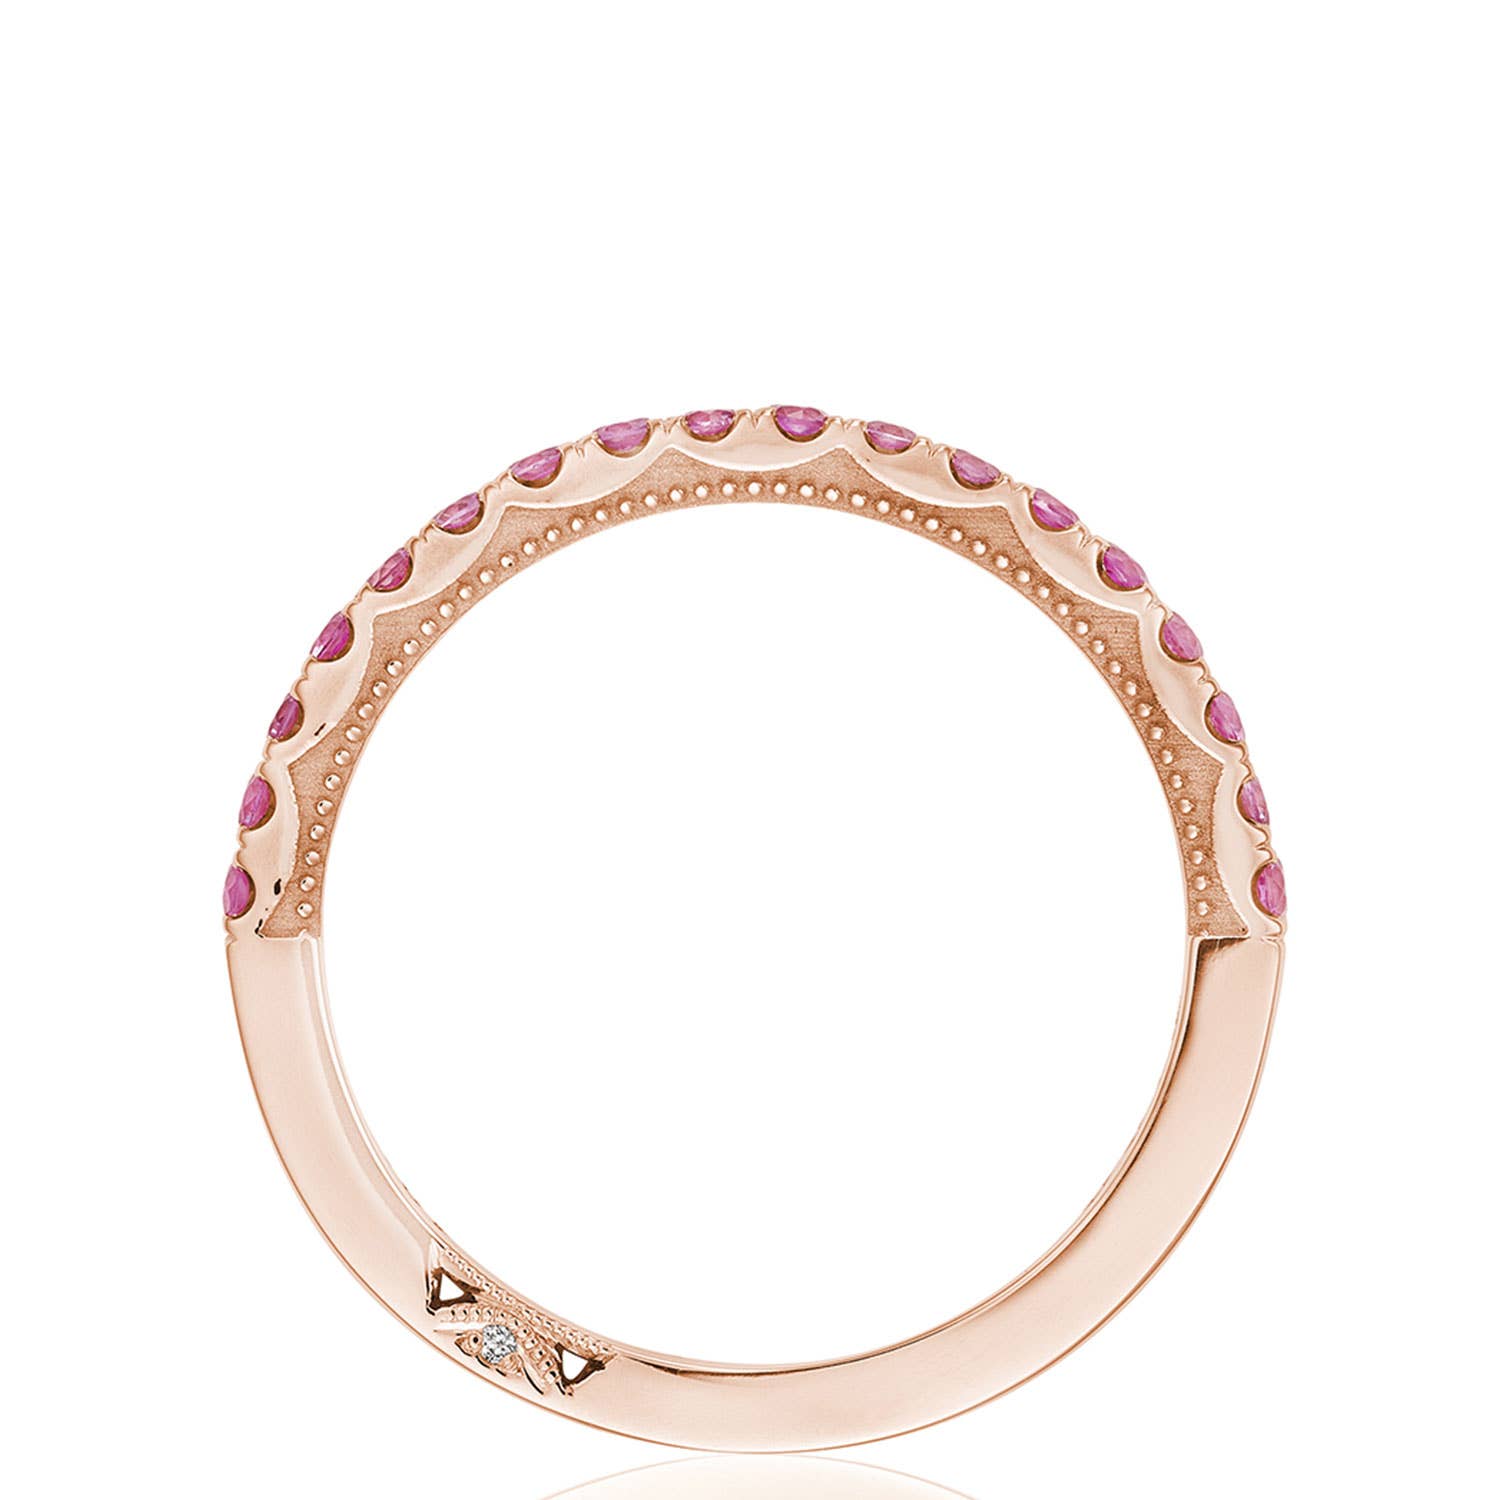 Tacori Rainbow Ring in Pink Sapphire 2667B12PKSPK